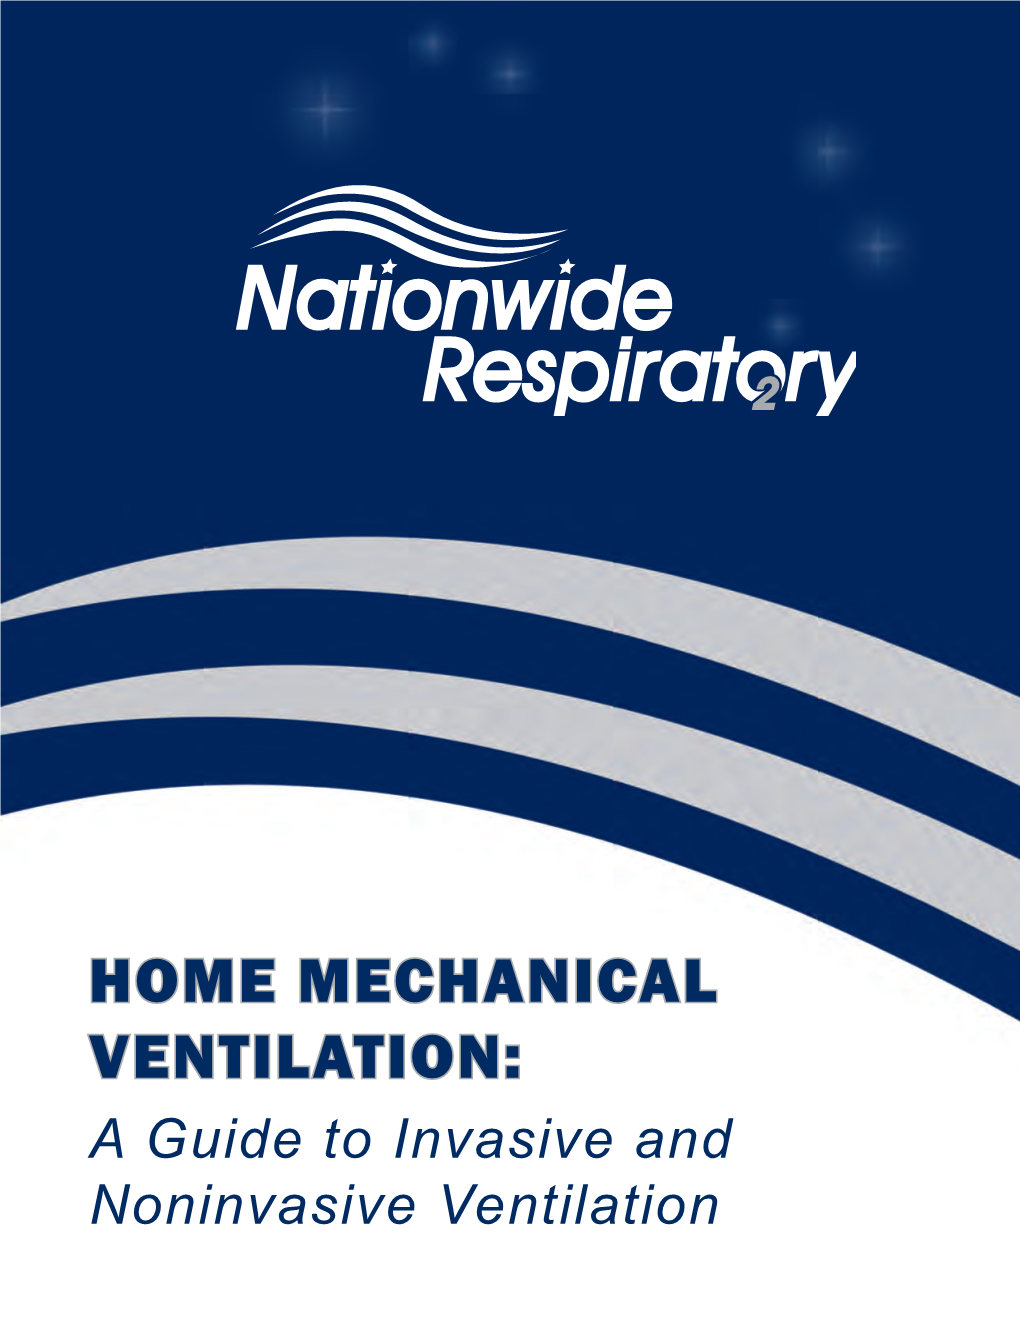 Home Mechanical Ventilation